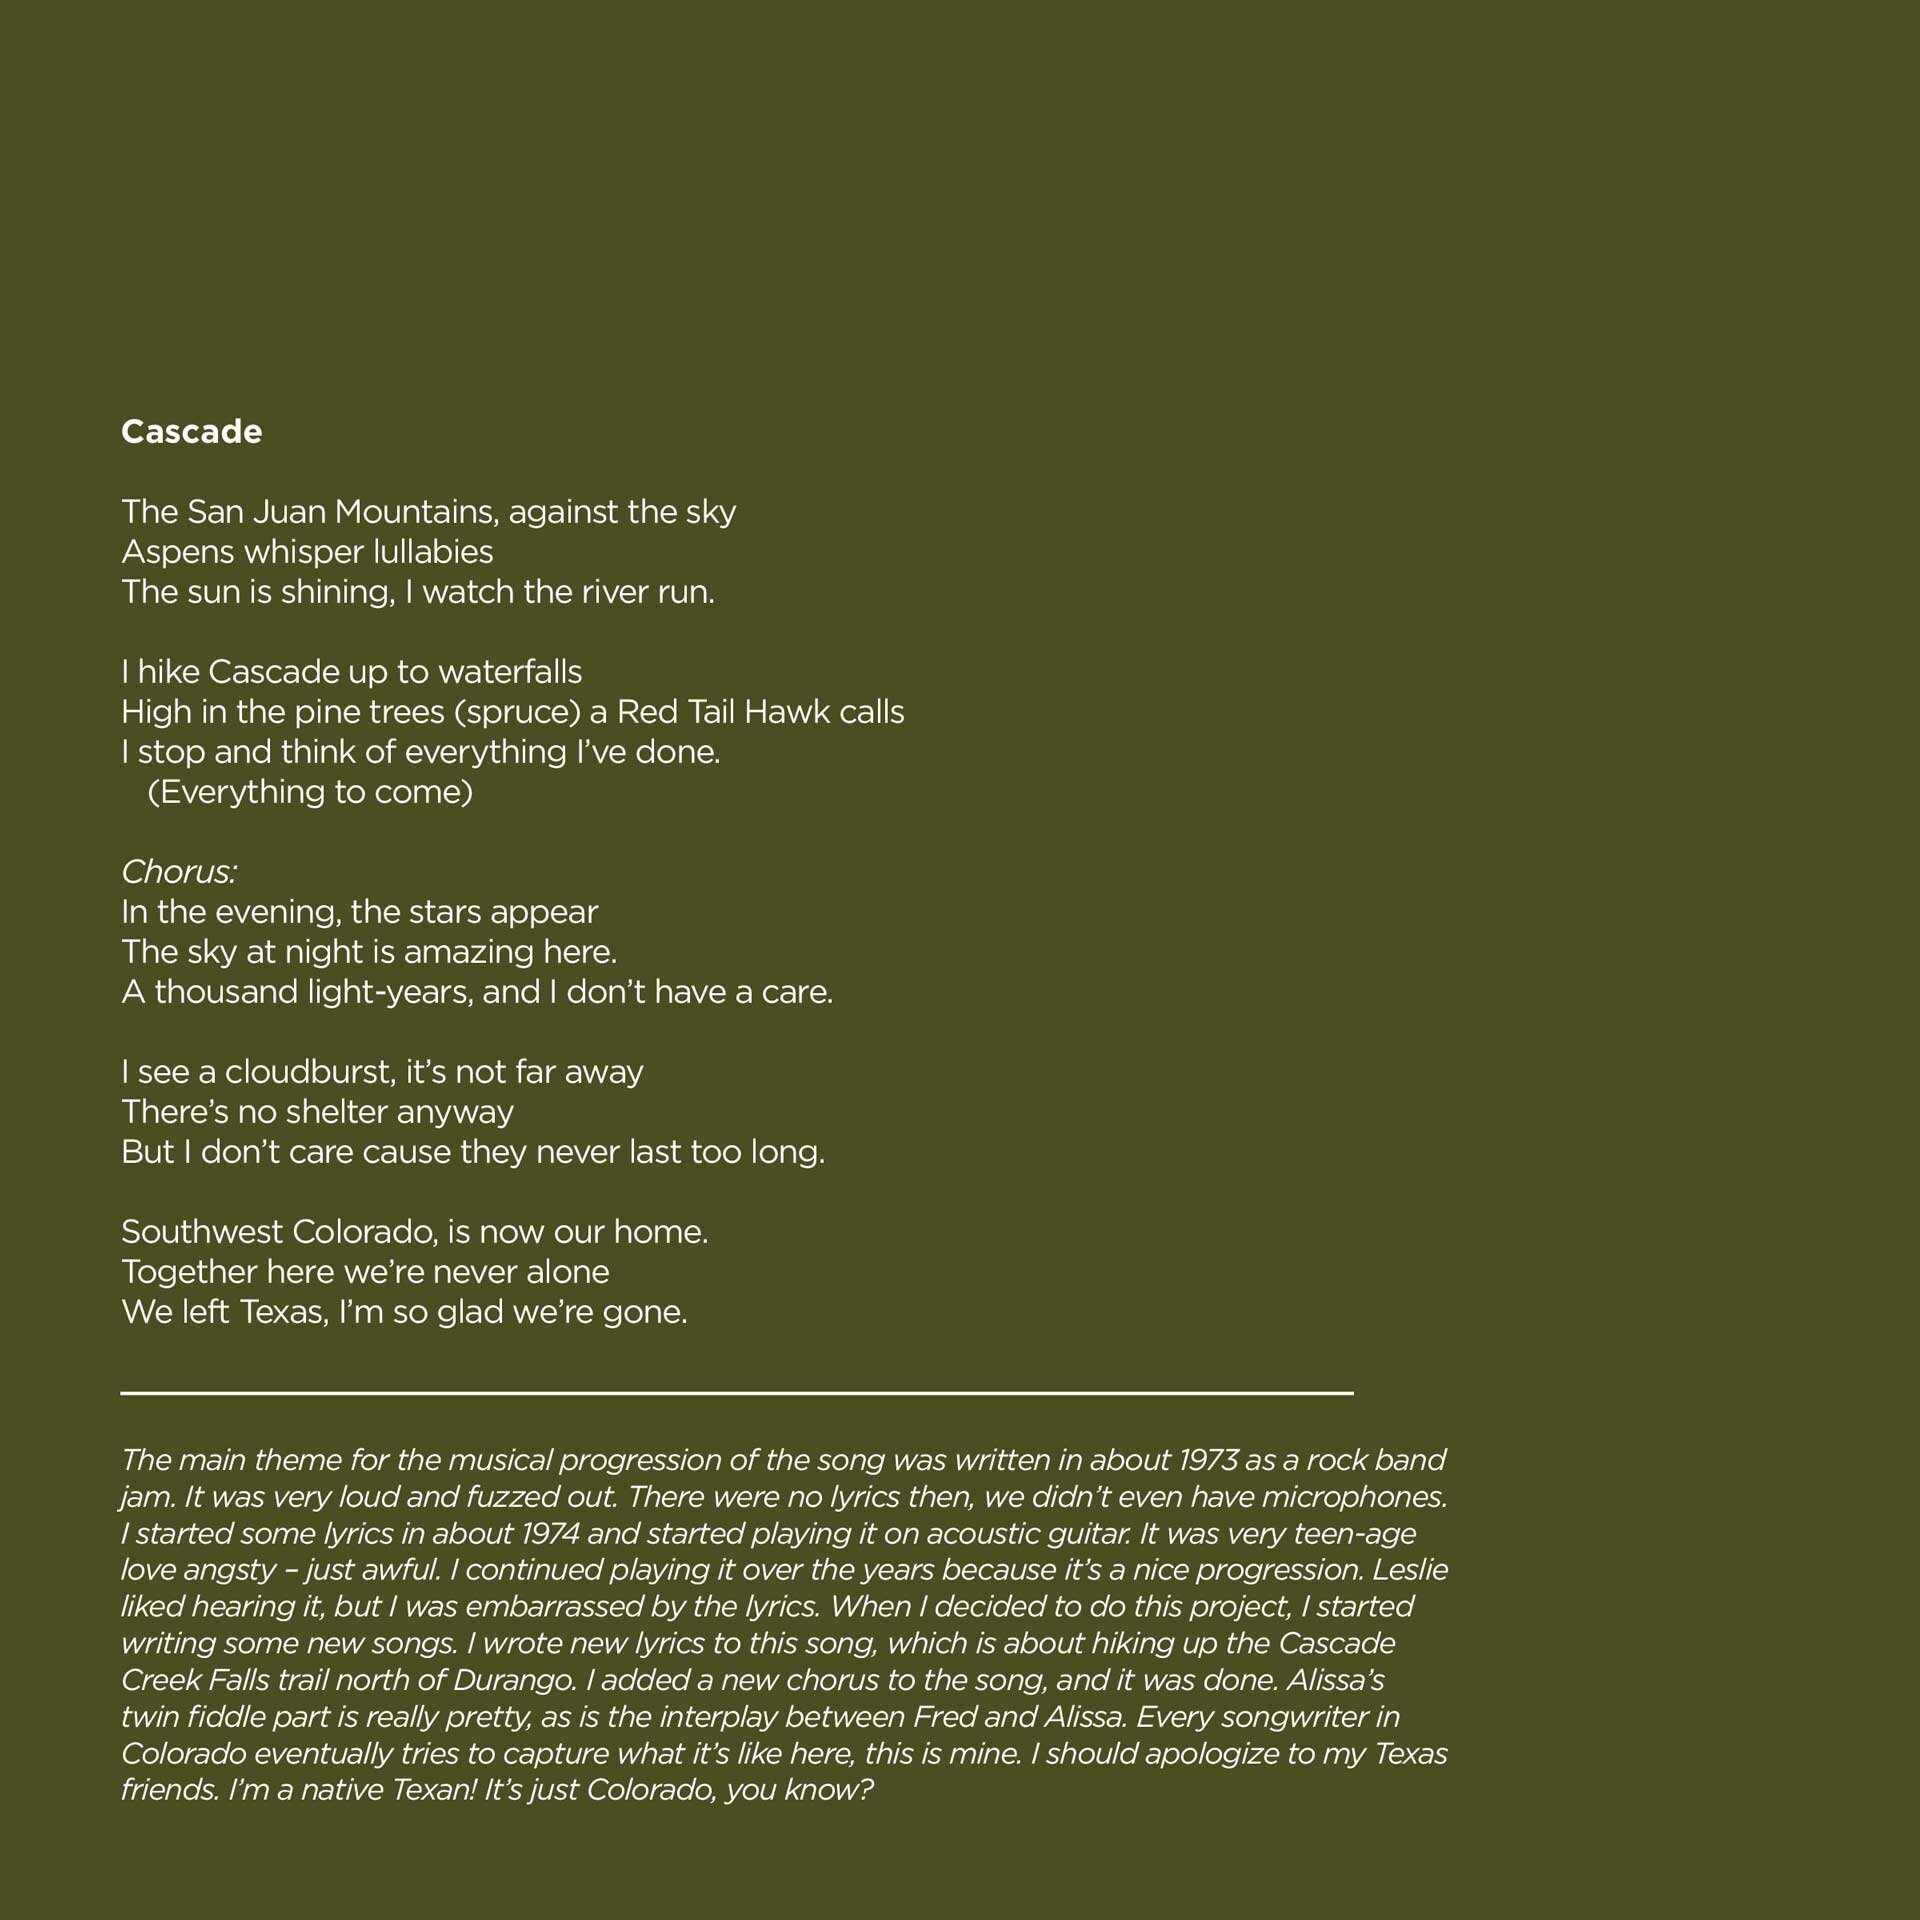 Bluskay - Burning Skylines / Paradise Valley: lyrics and songs